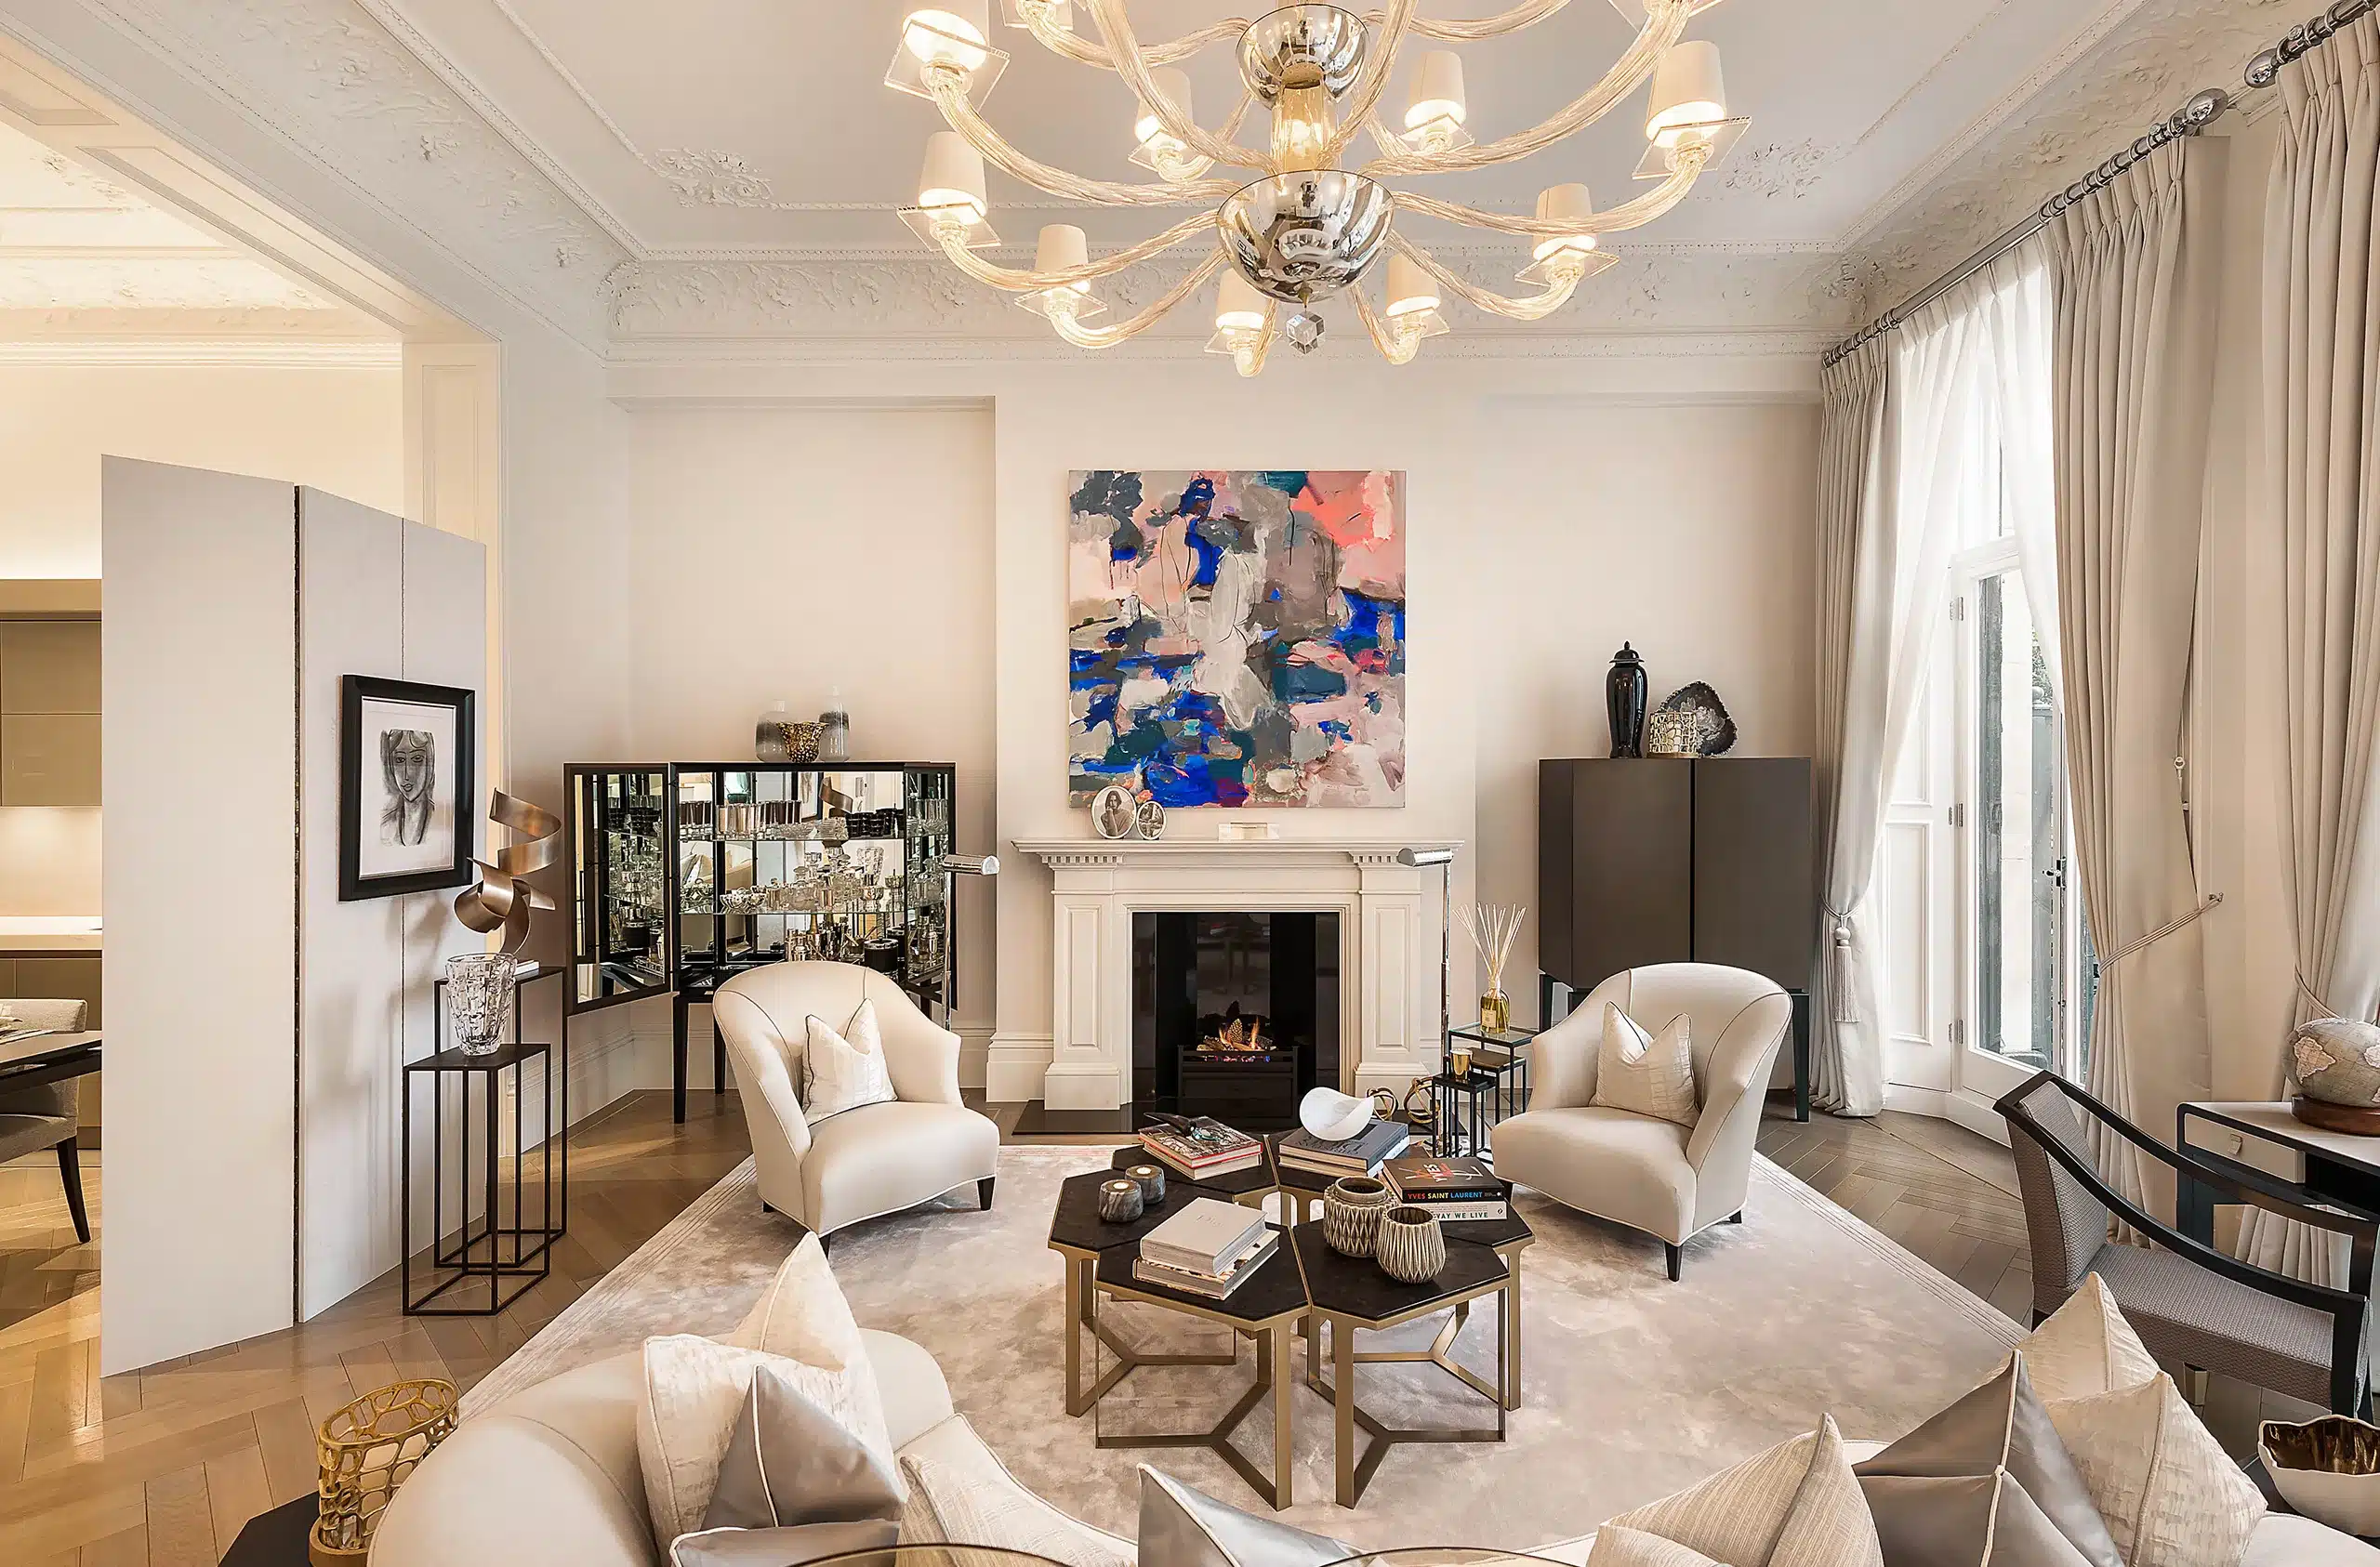 A living room as designed by katharine pooleys award winning london interior design studio